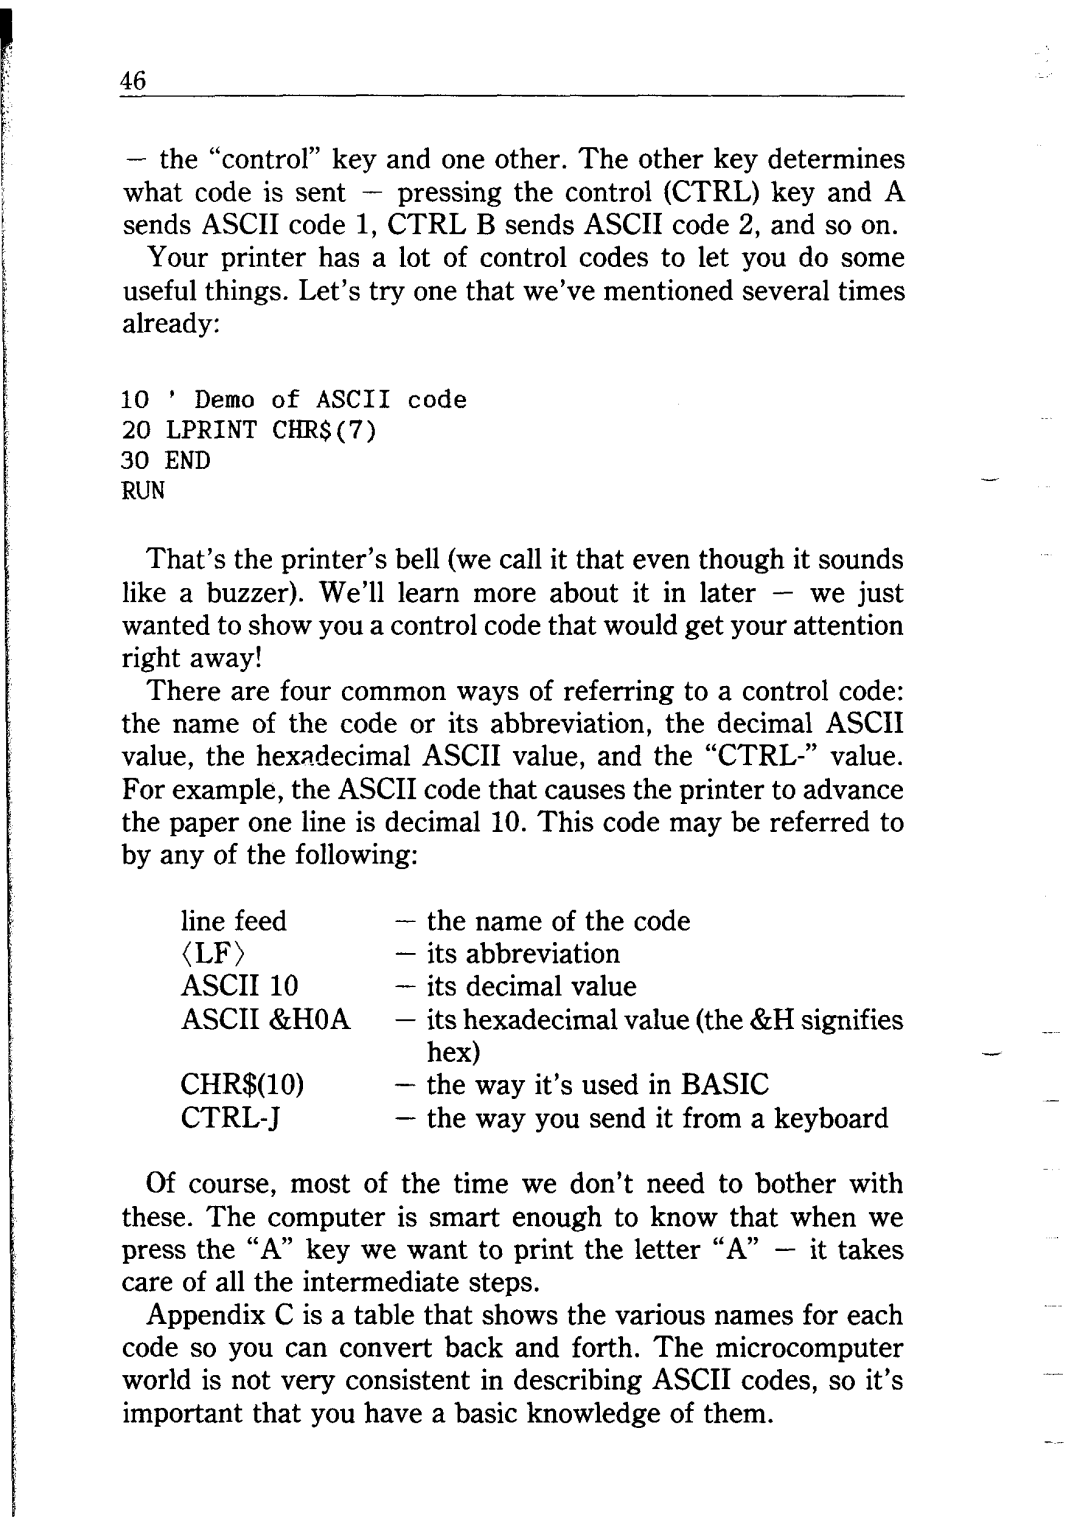 Star Micronics NB24-10/15 user manual Demo of ASCII code 20 LPRINT CHR$7 30 END RUN 